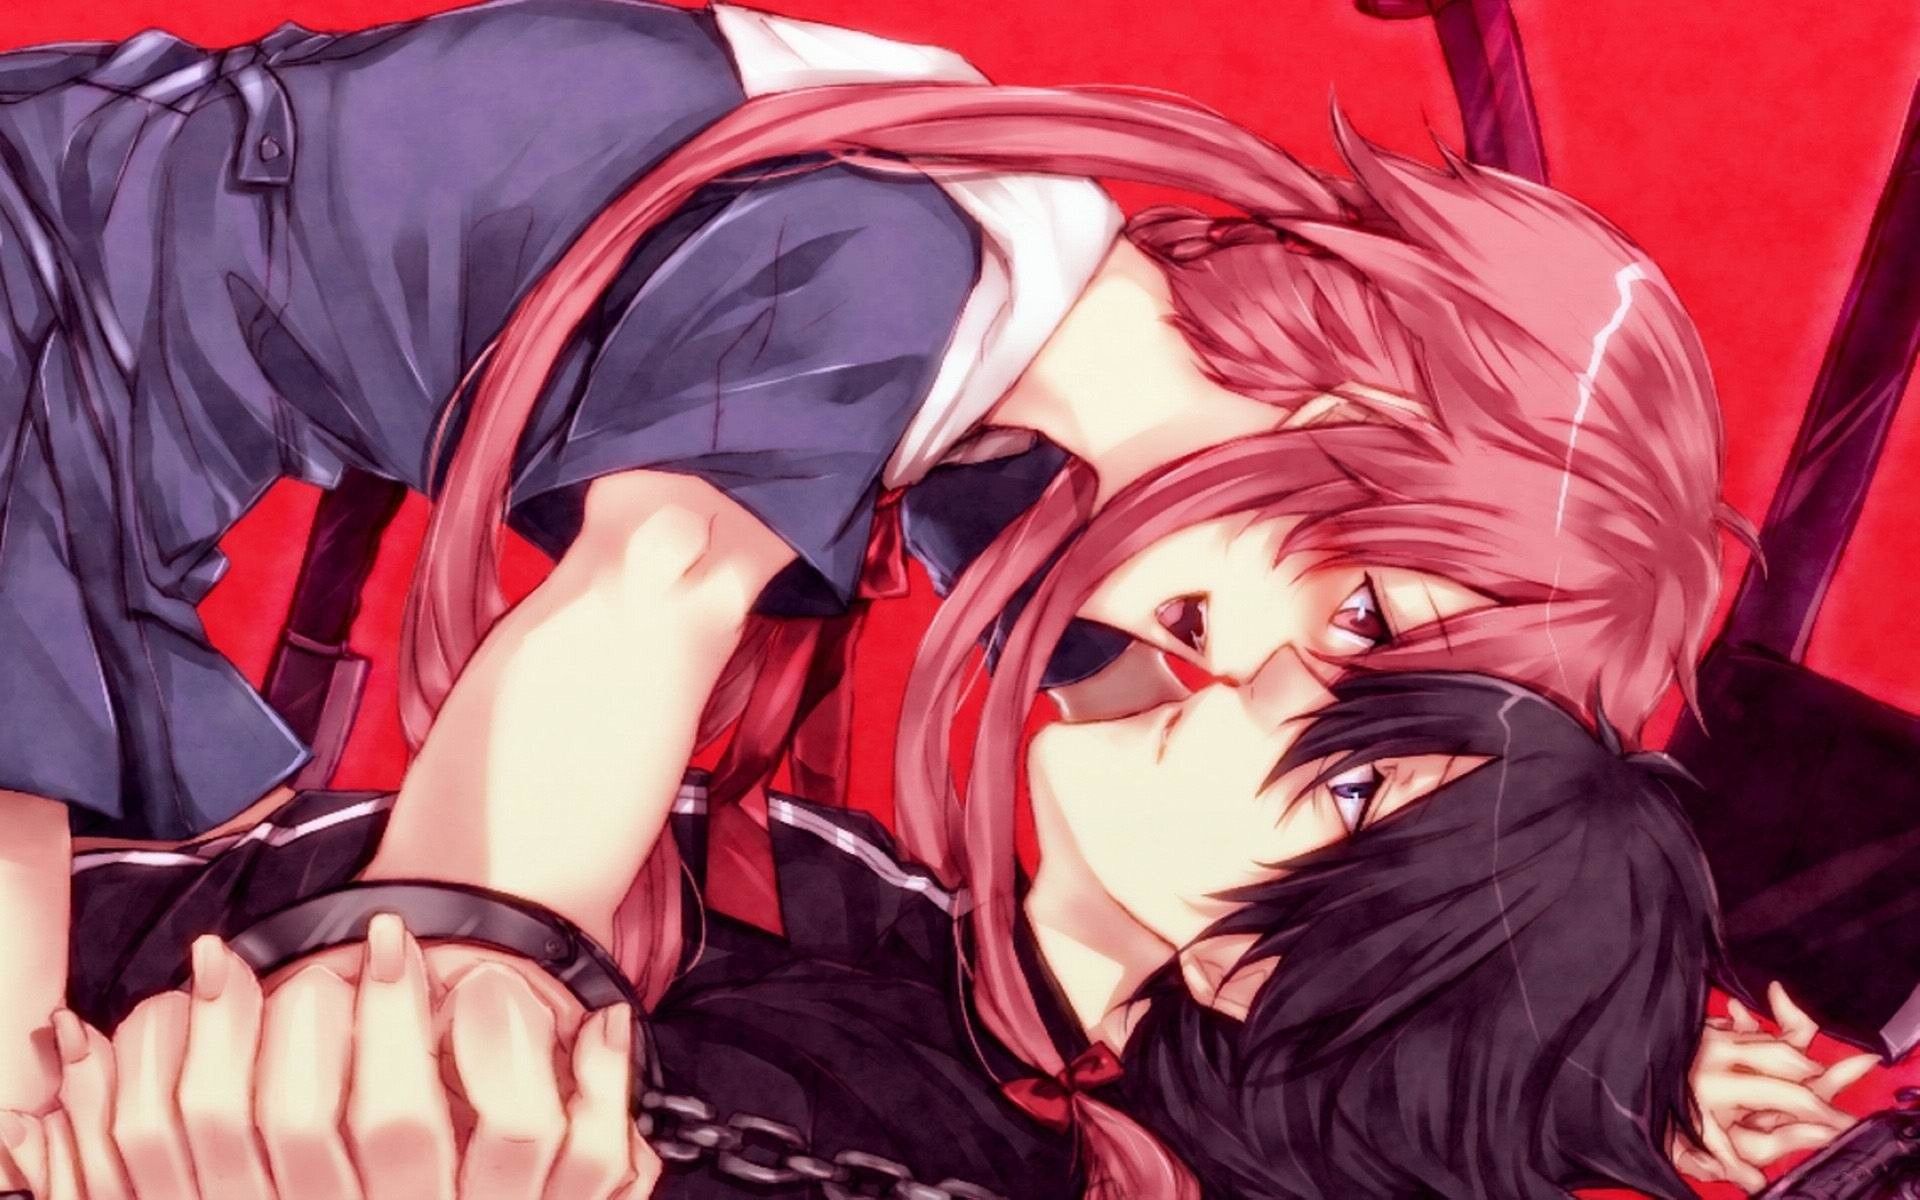 CLICK For More - Anime Couple  Anime couple kiss, Anime couples manga, Anime  couples